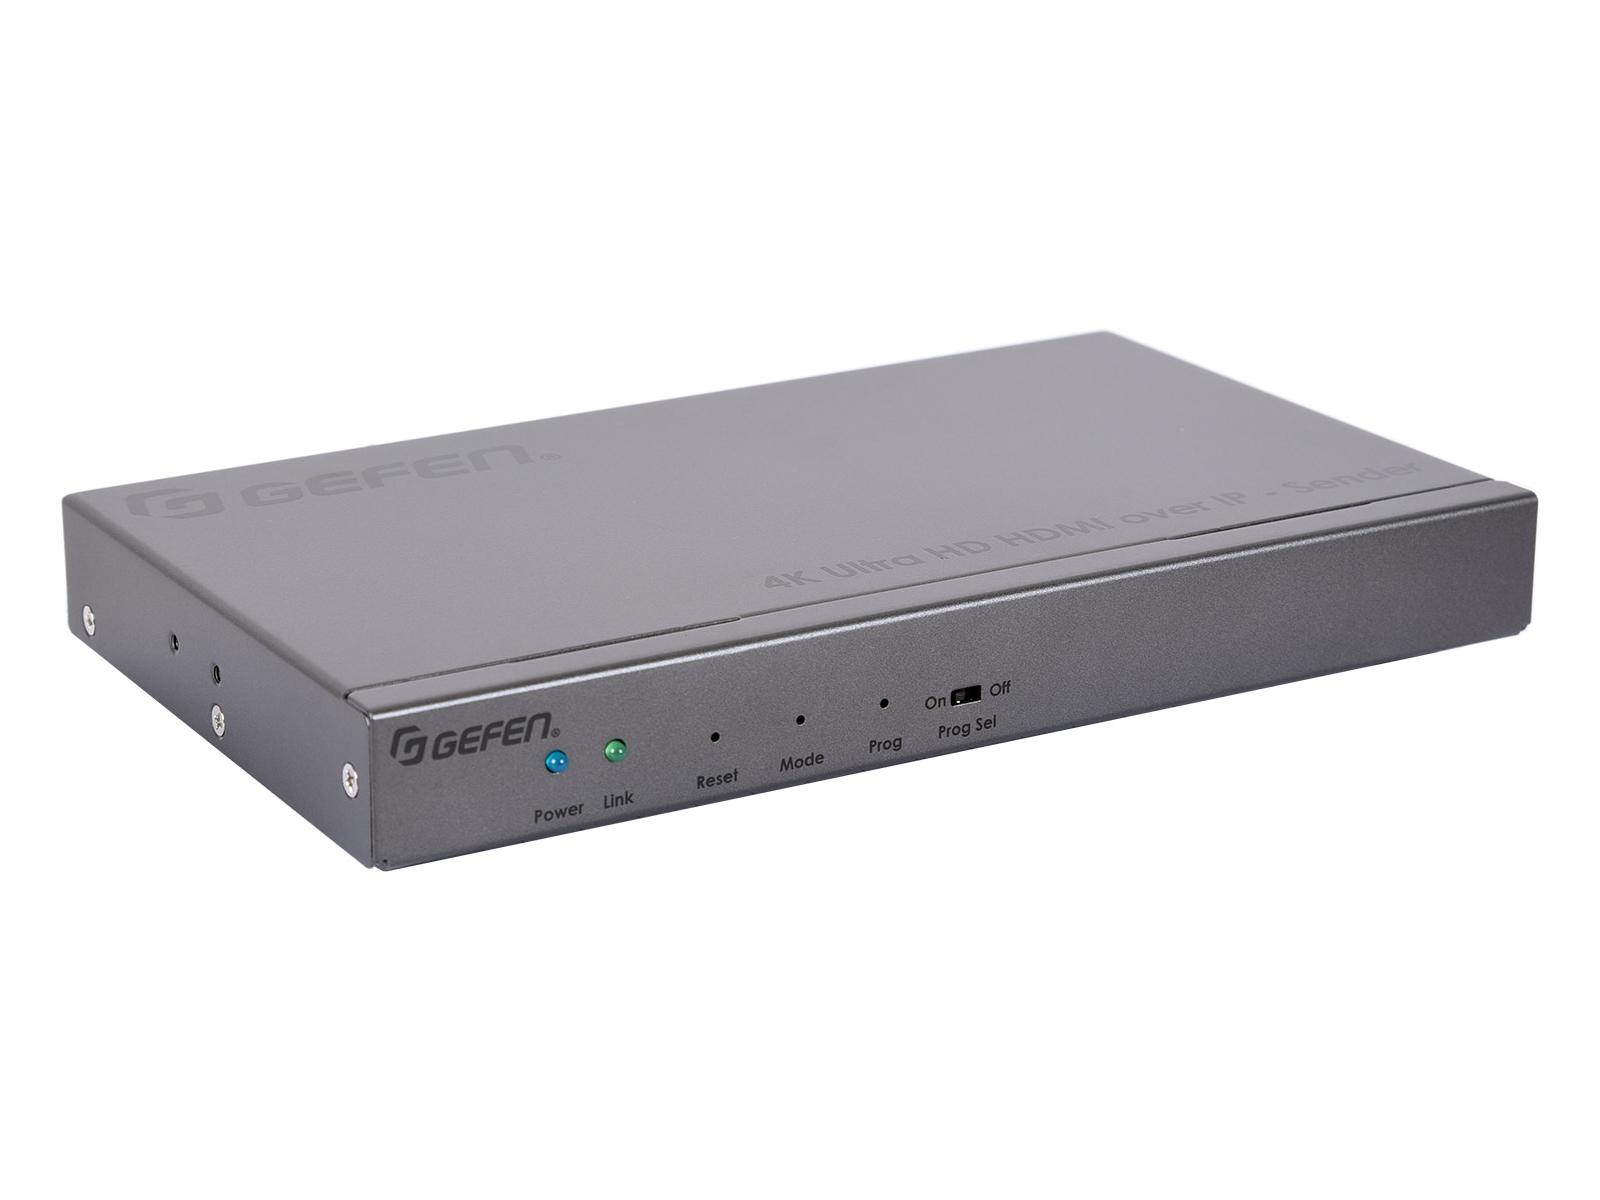 EXT-UHD-LANS-TX 4K Ultra HD HDMI over IP Extender (Transmitter) by Gefen